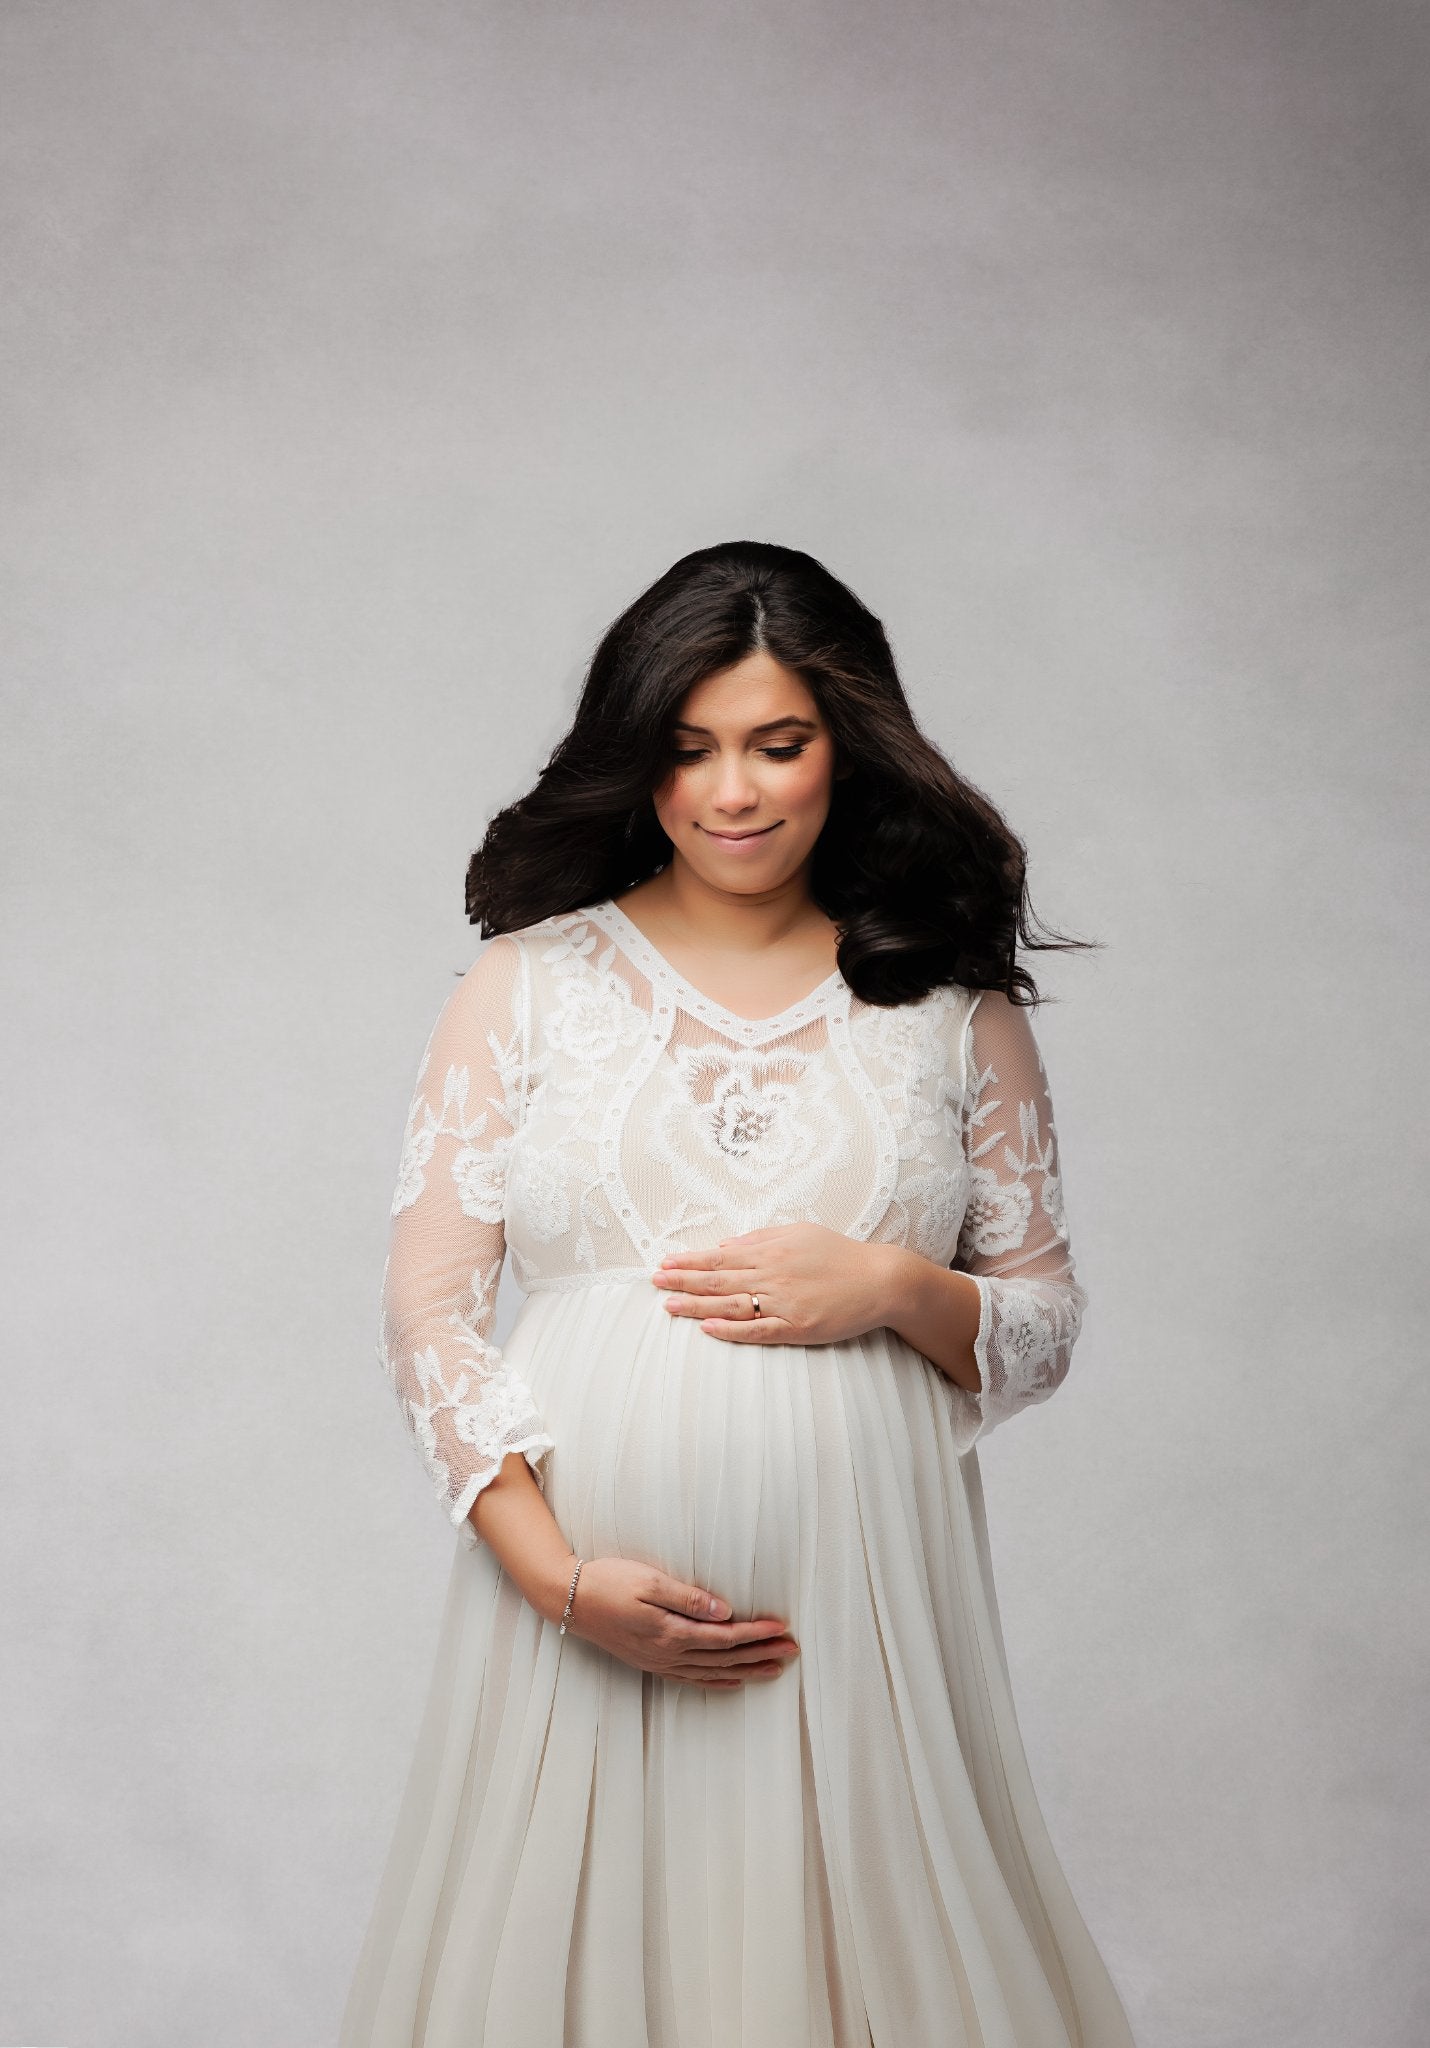 Elegant Lace Gown - maternity photoshoot dress